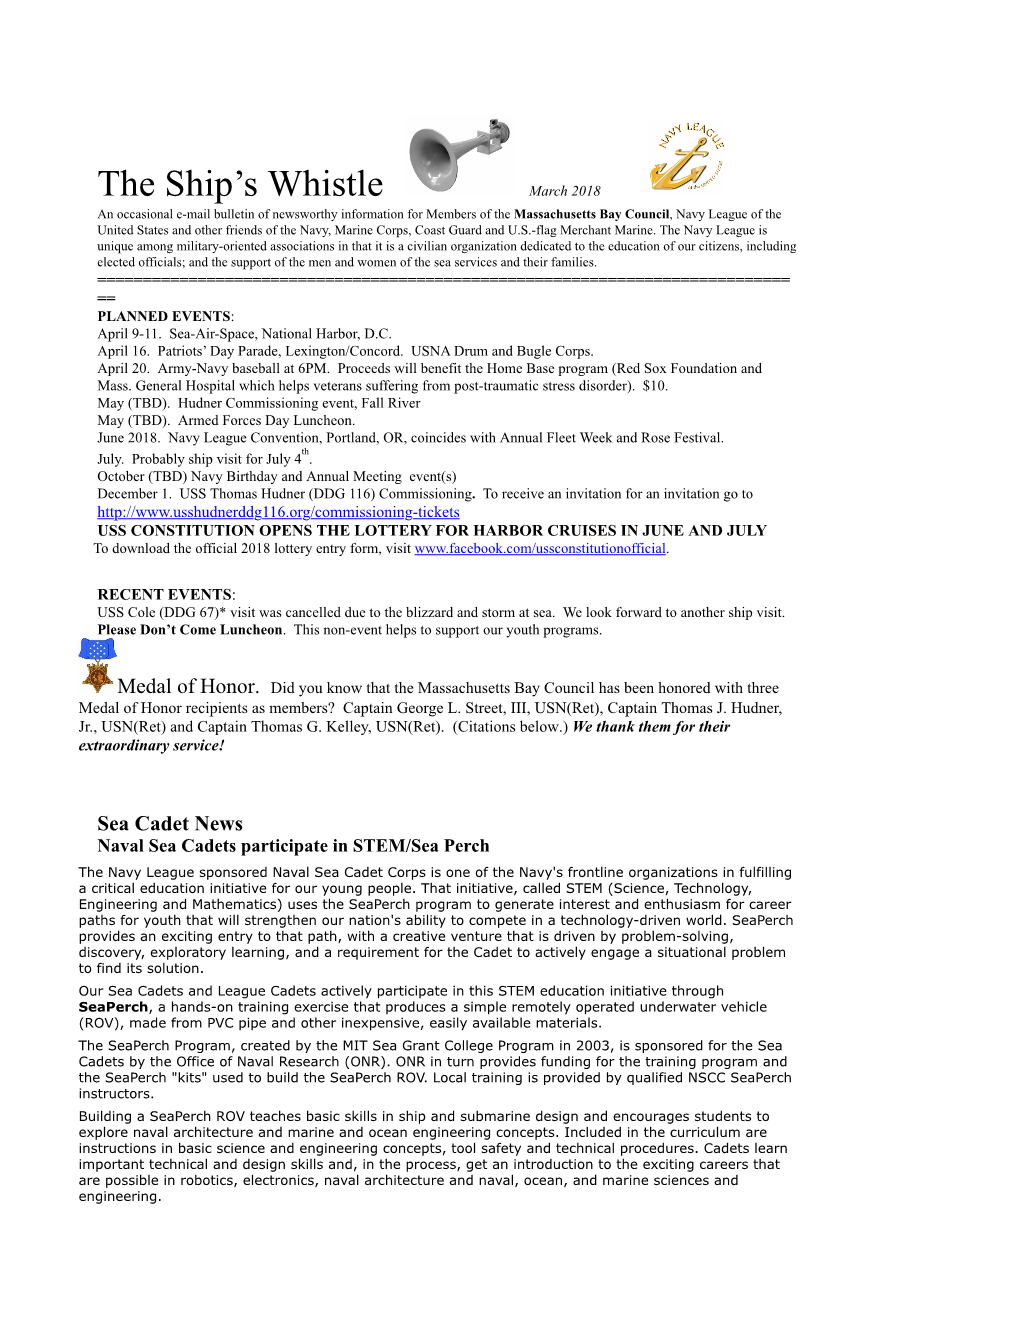 The Ship's Whistle Mar 2018.Docx